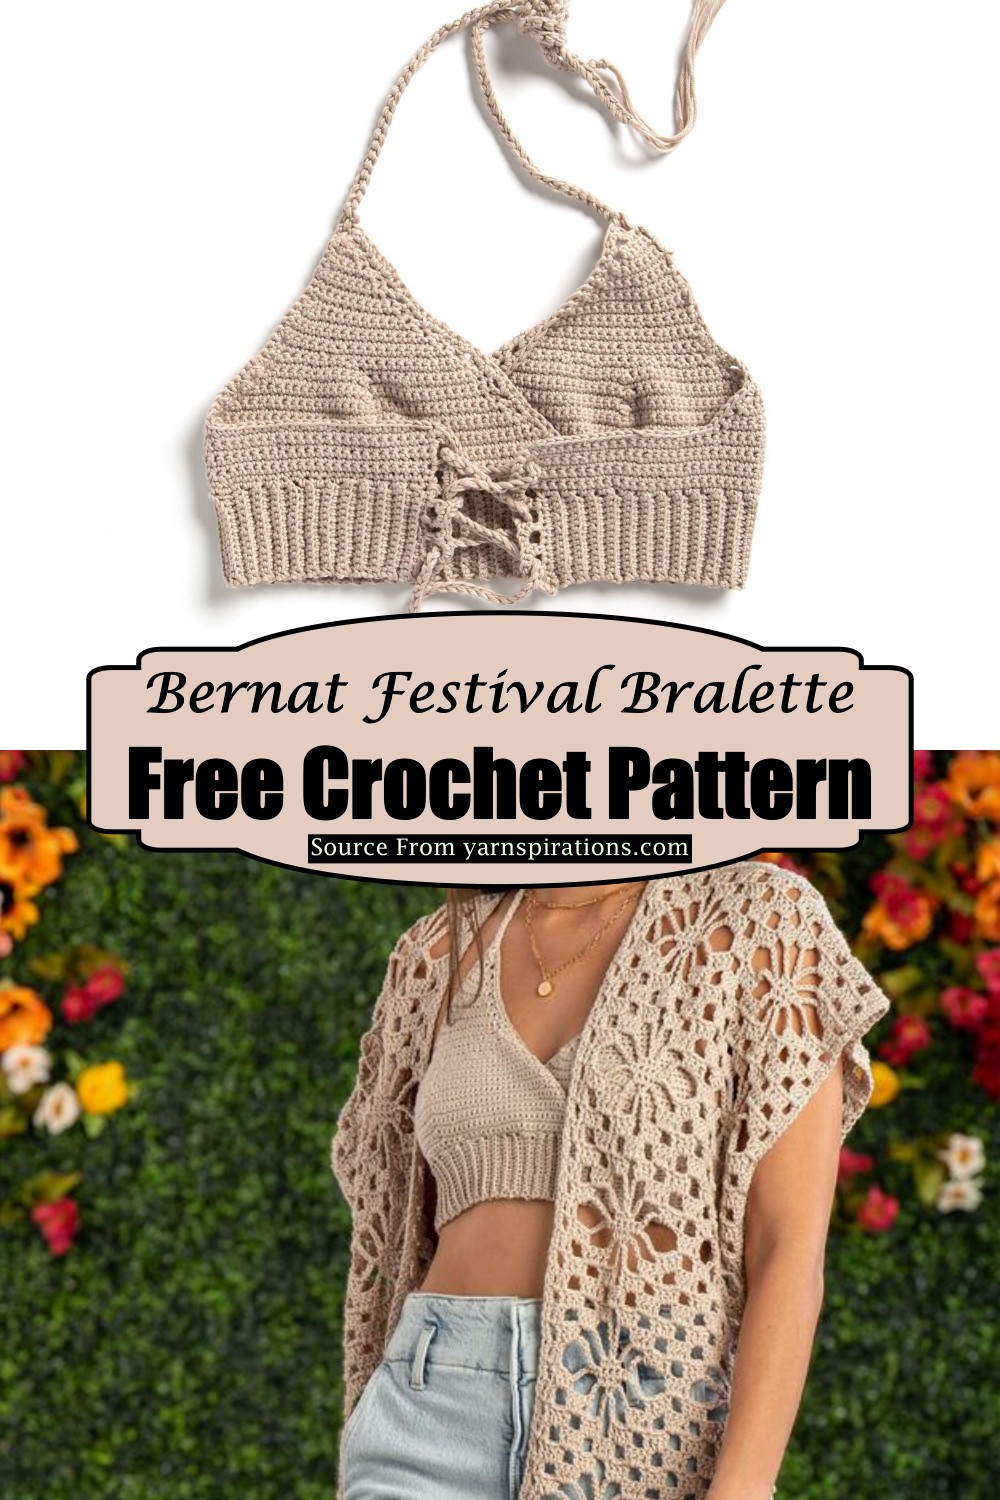 https://www.crochetpatterns.in/wp-content/uploads/2021/11/Bernat-Crochet-Festival-Bralette.jpg